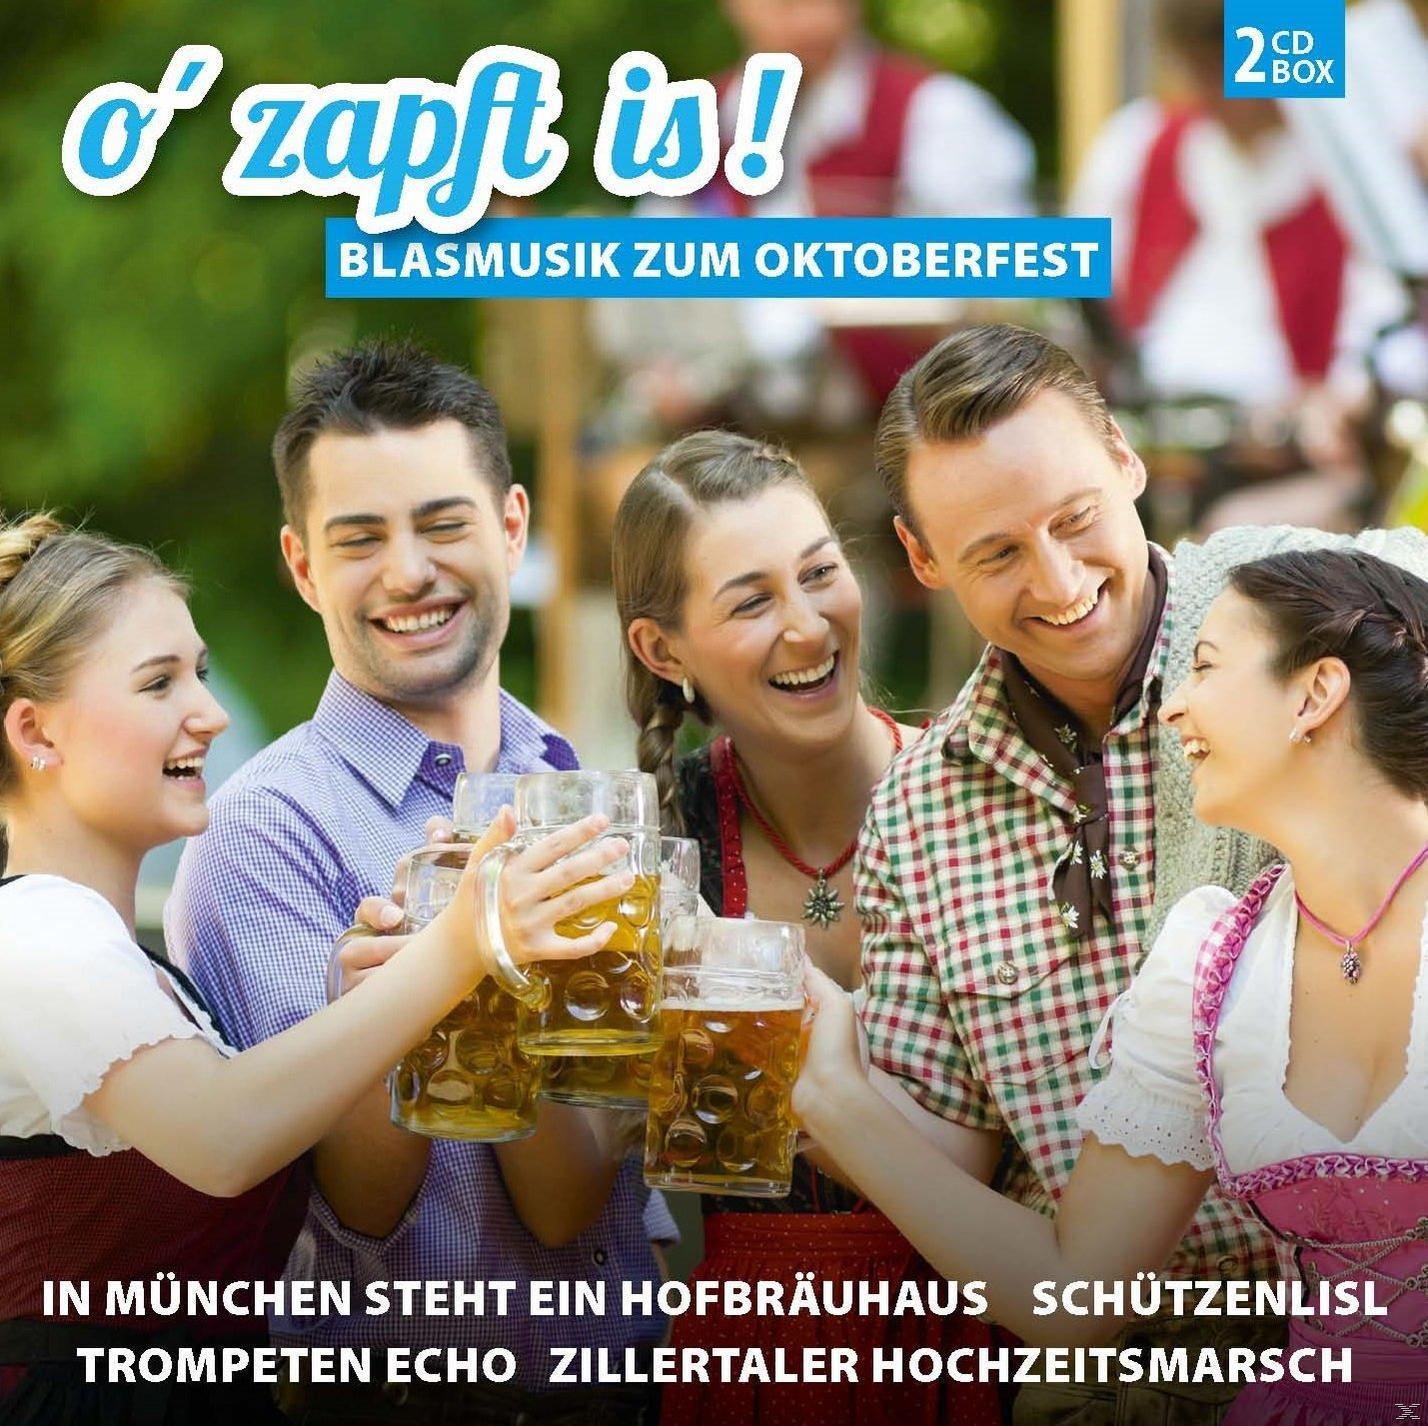 VARIOUS - O Zapft - (CD) Is. Blasmusik Oktoberfest Zum